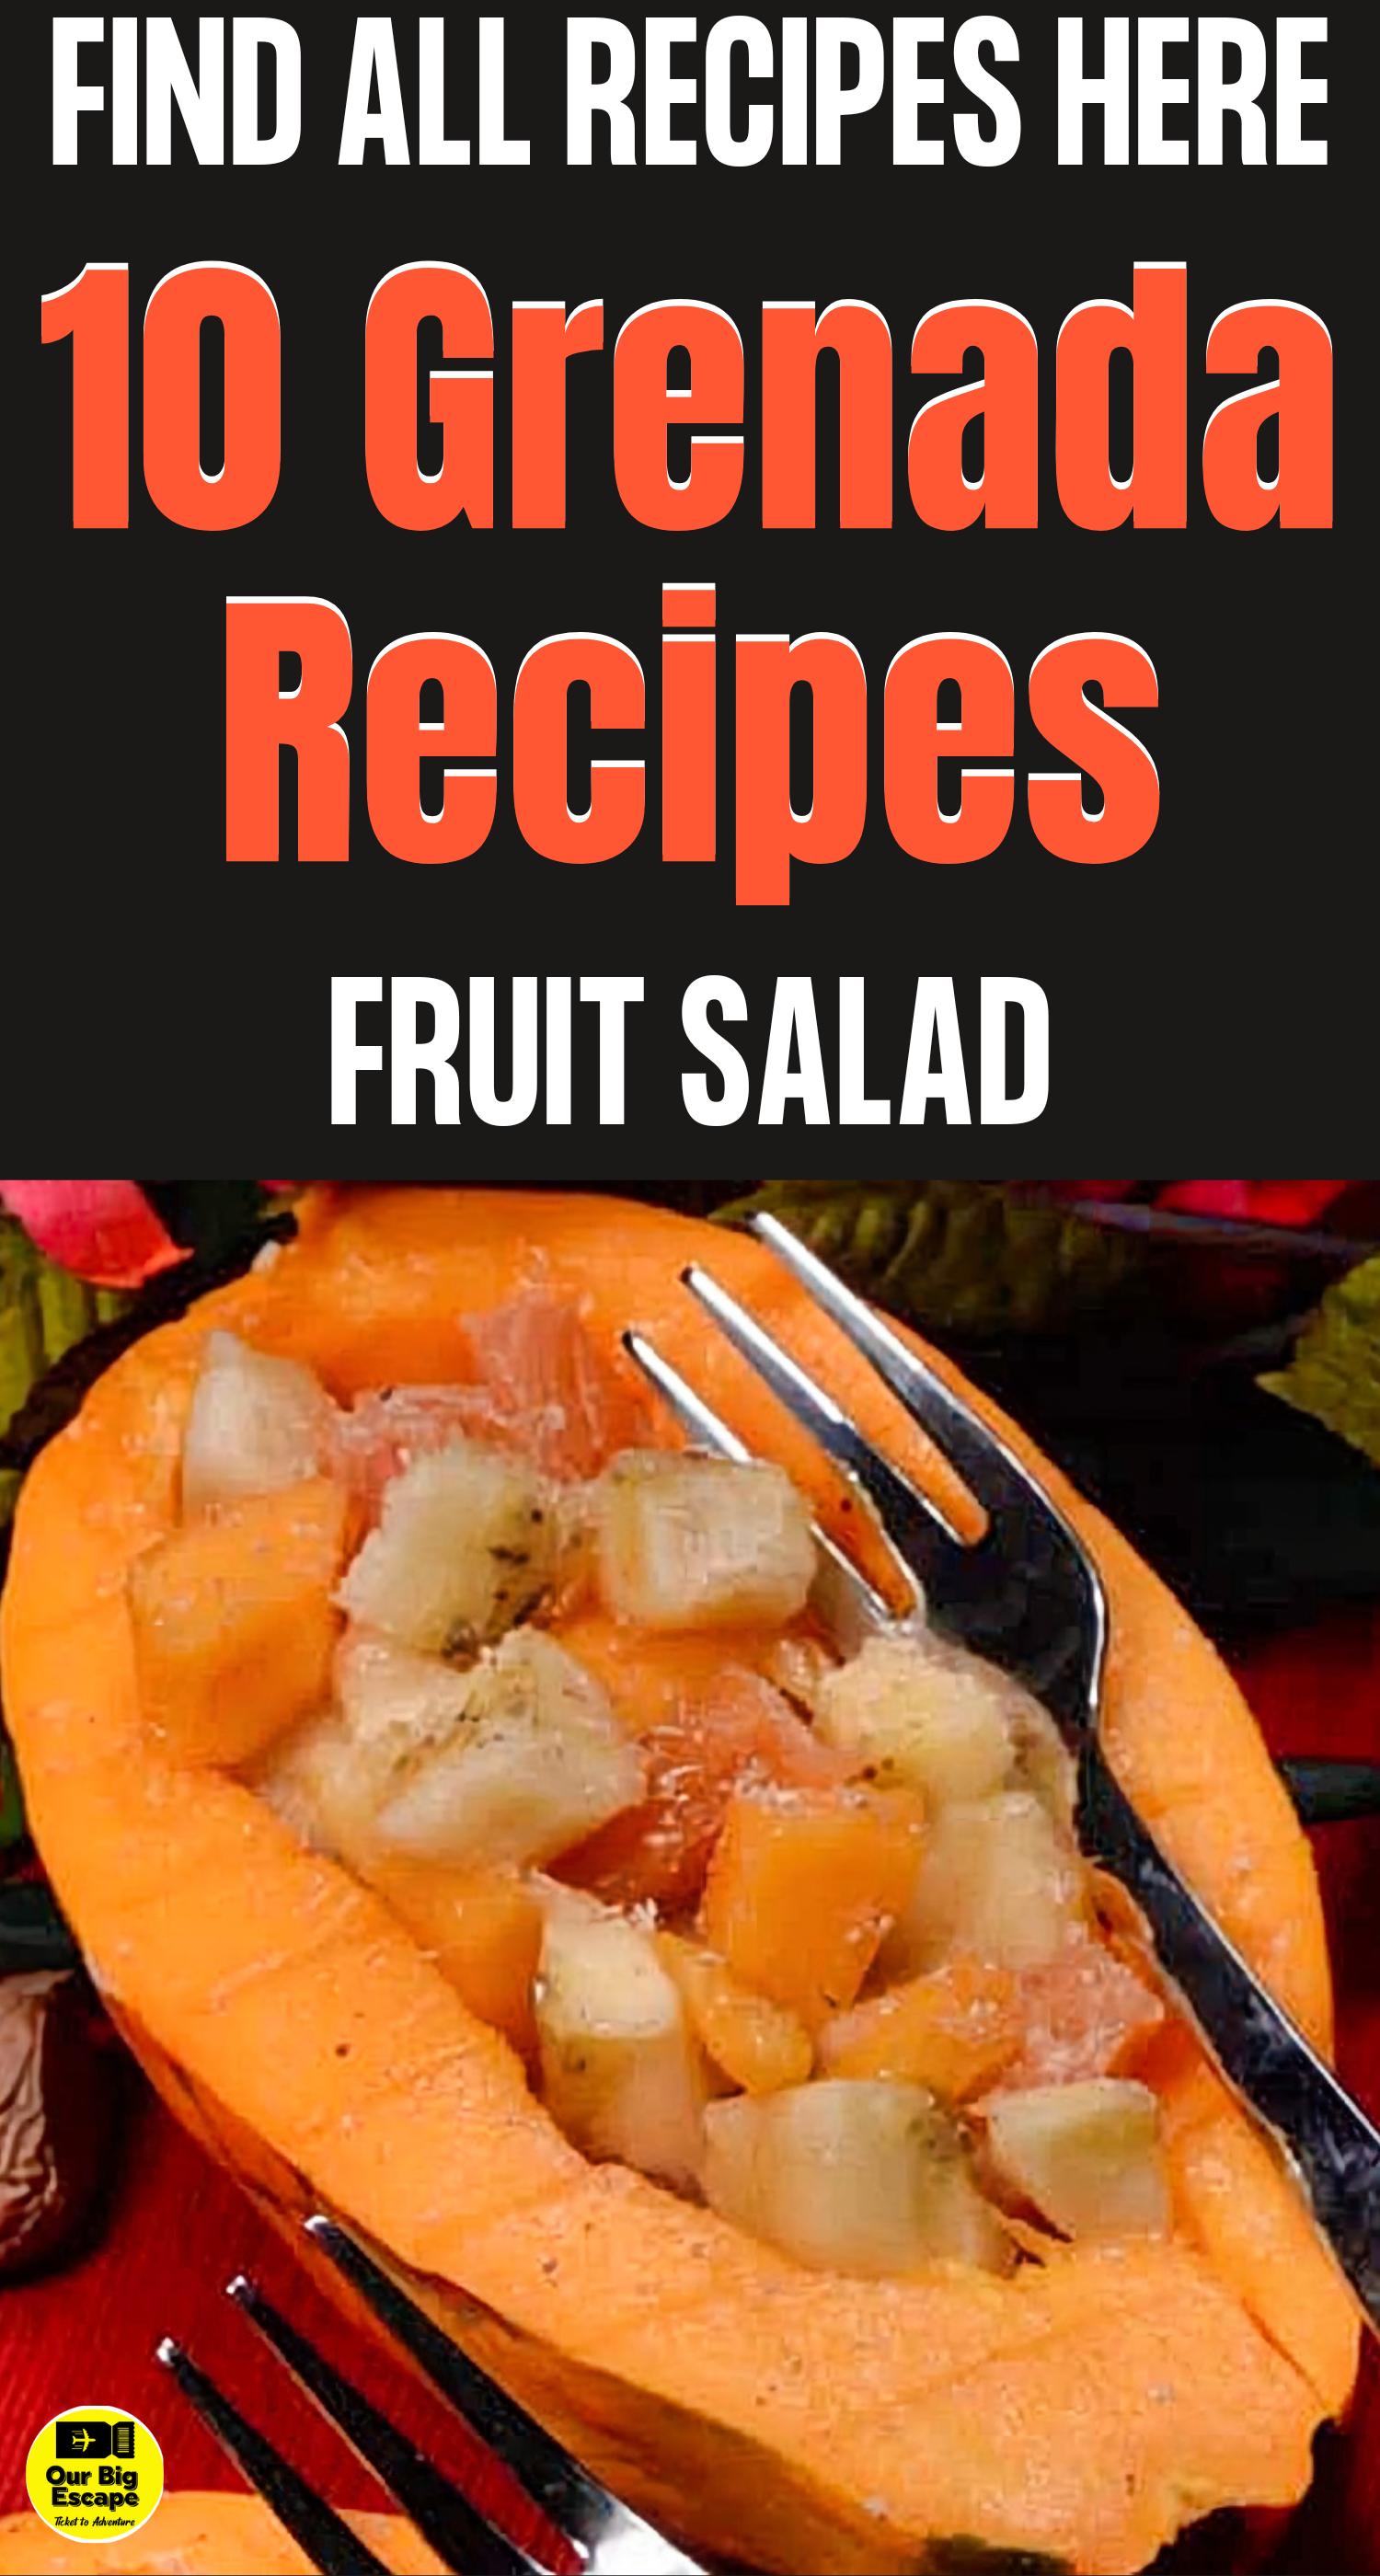 10 Grenada Recipes - Fruit Salad